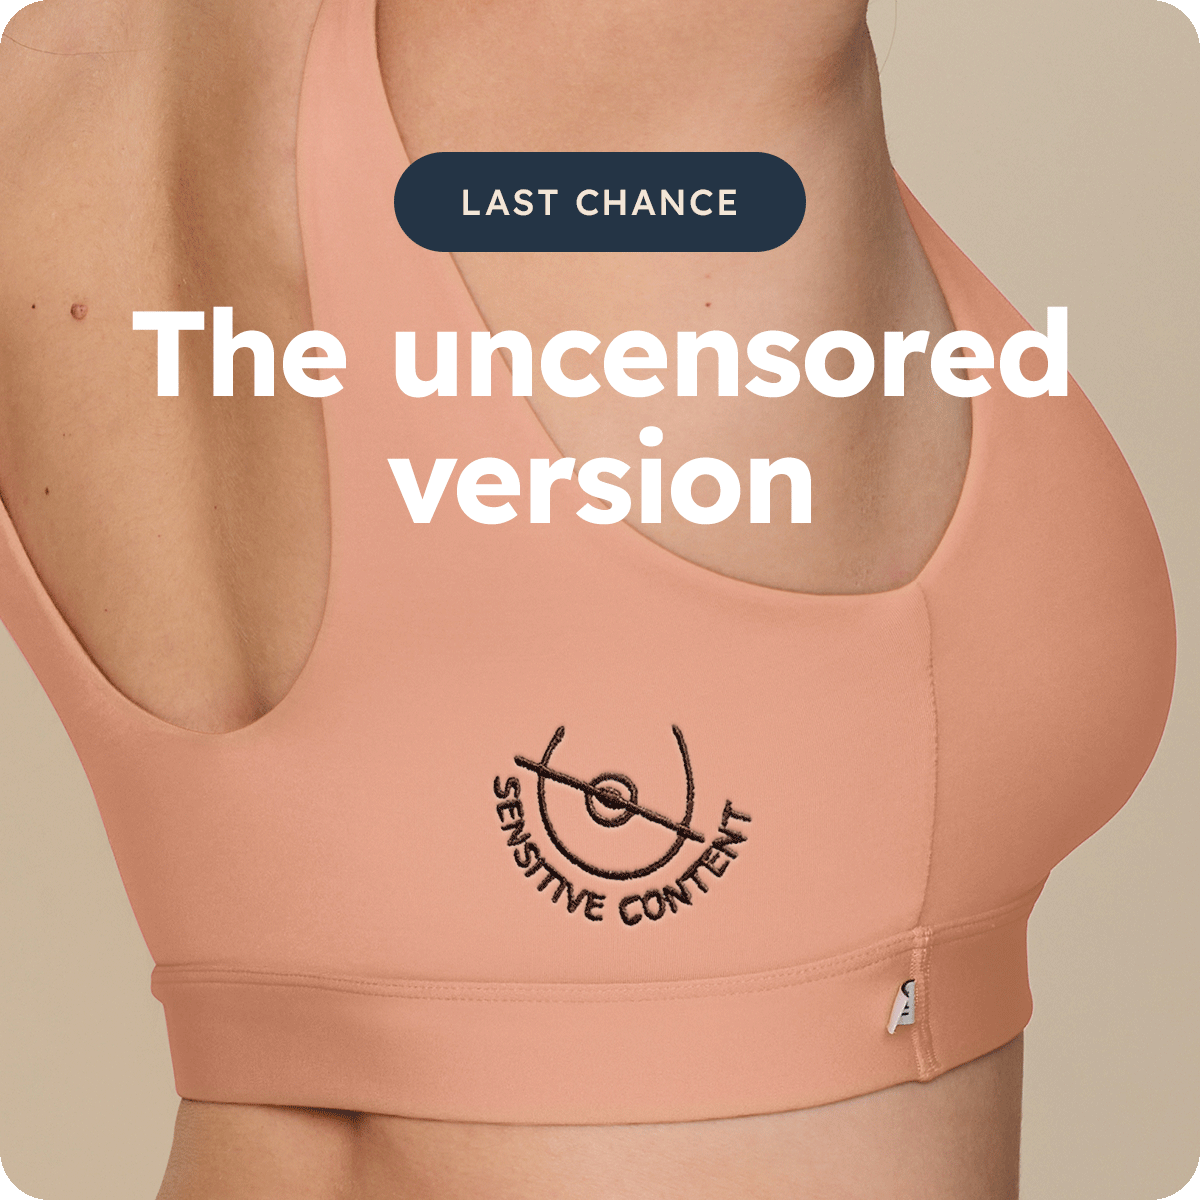 LAST CHANCE: The uncensored version